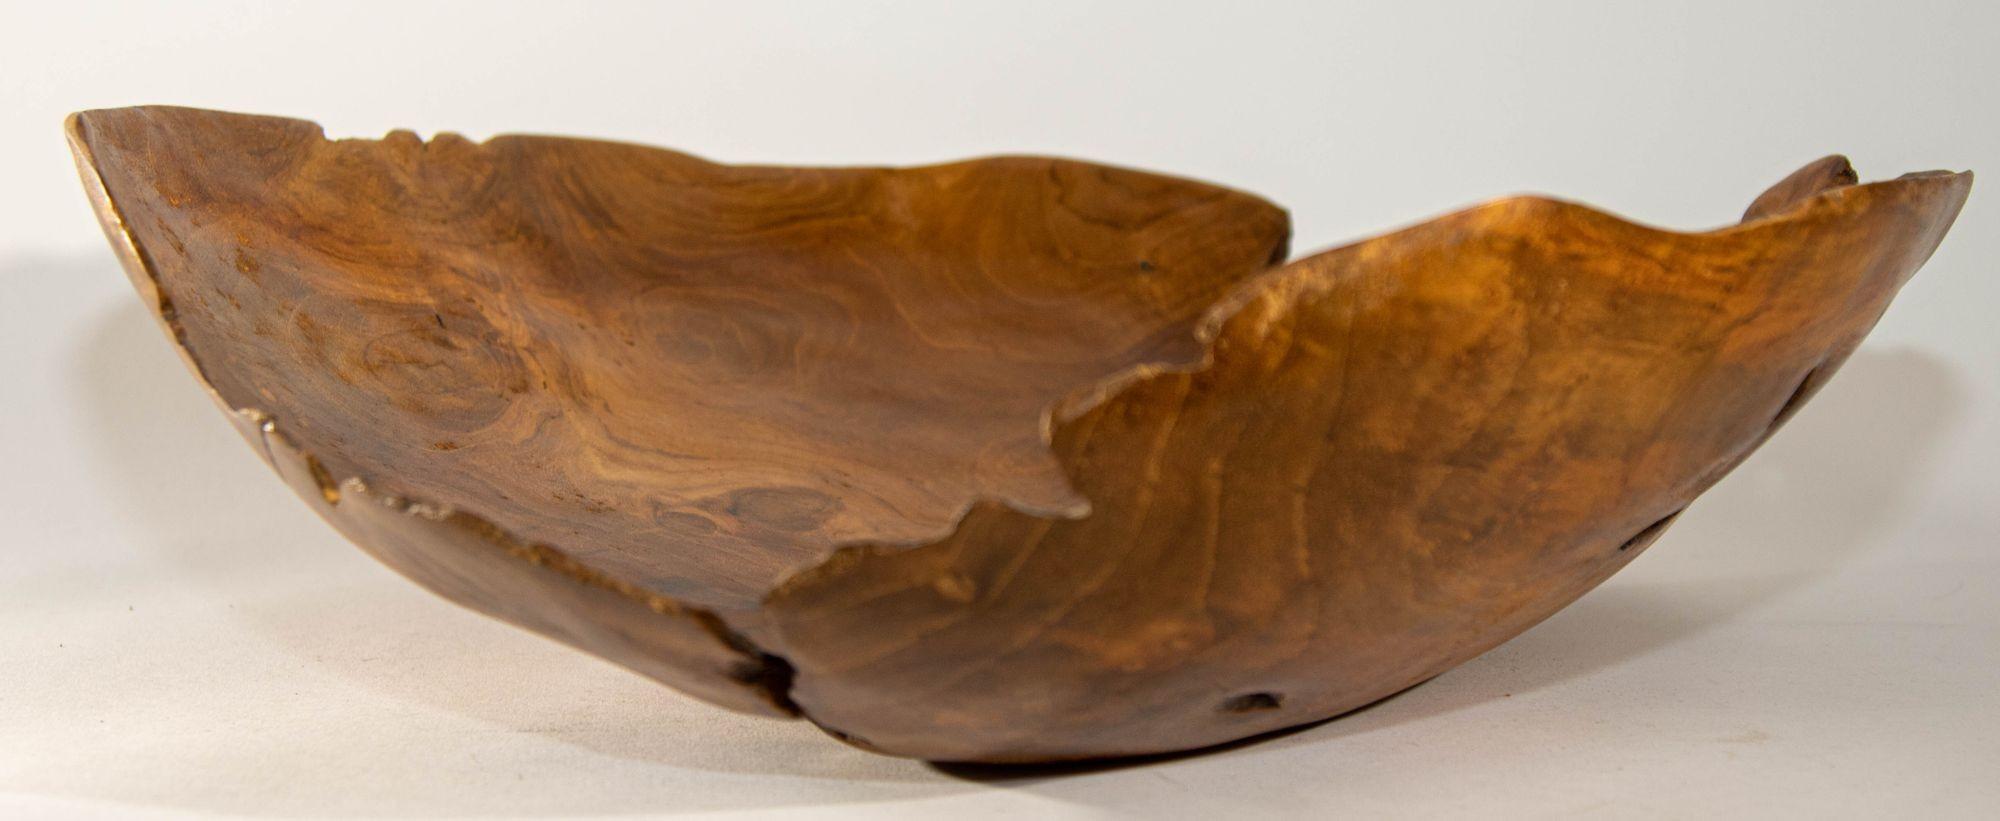 Hand-Crafted Organic Teak Burl Wood Bowl Natural Free Form Live Edge Sculptural Root Vessel